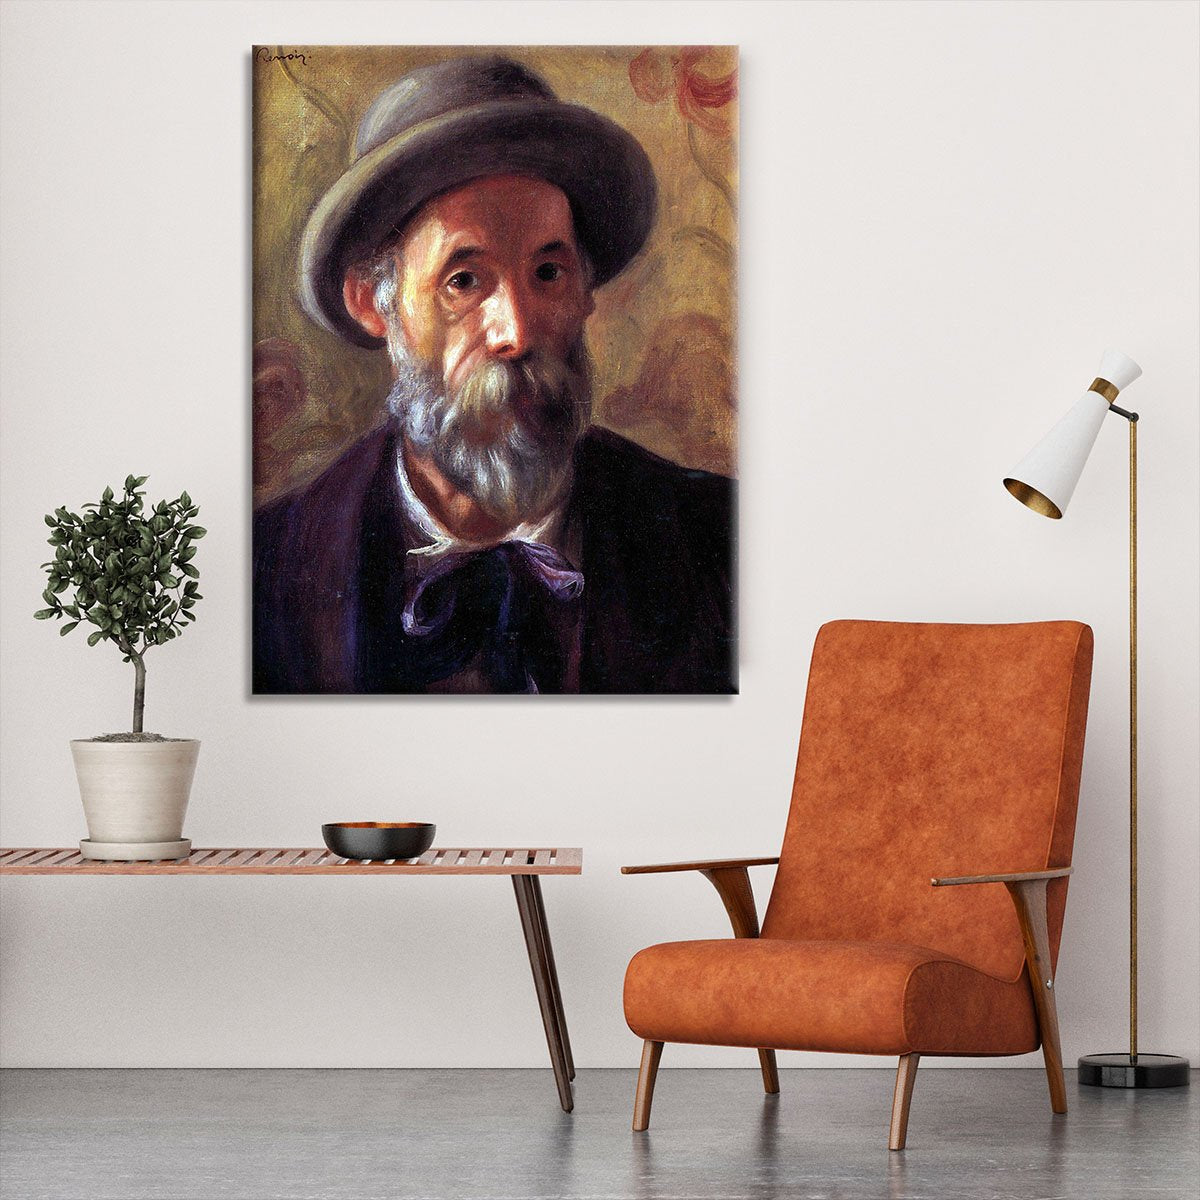 Self Portrait 1 by Renoir Canvas Print or Poster